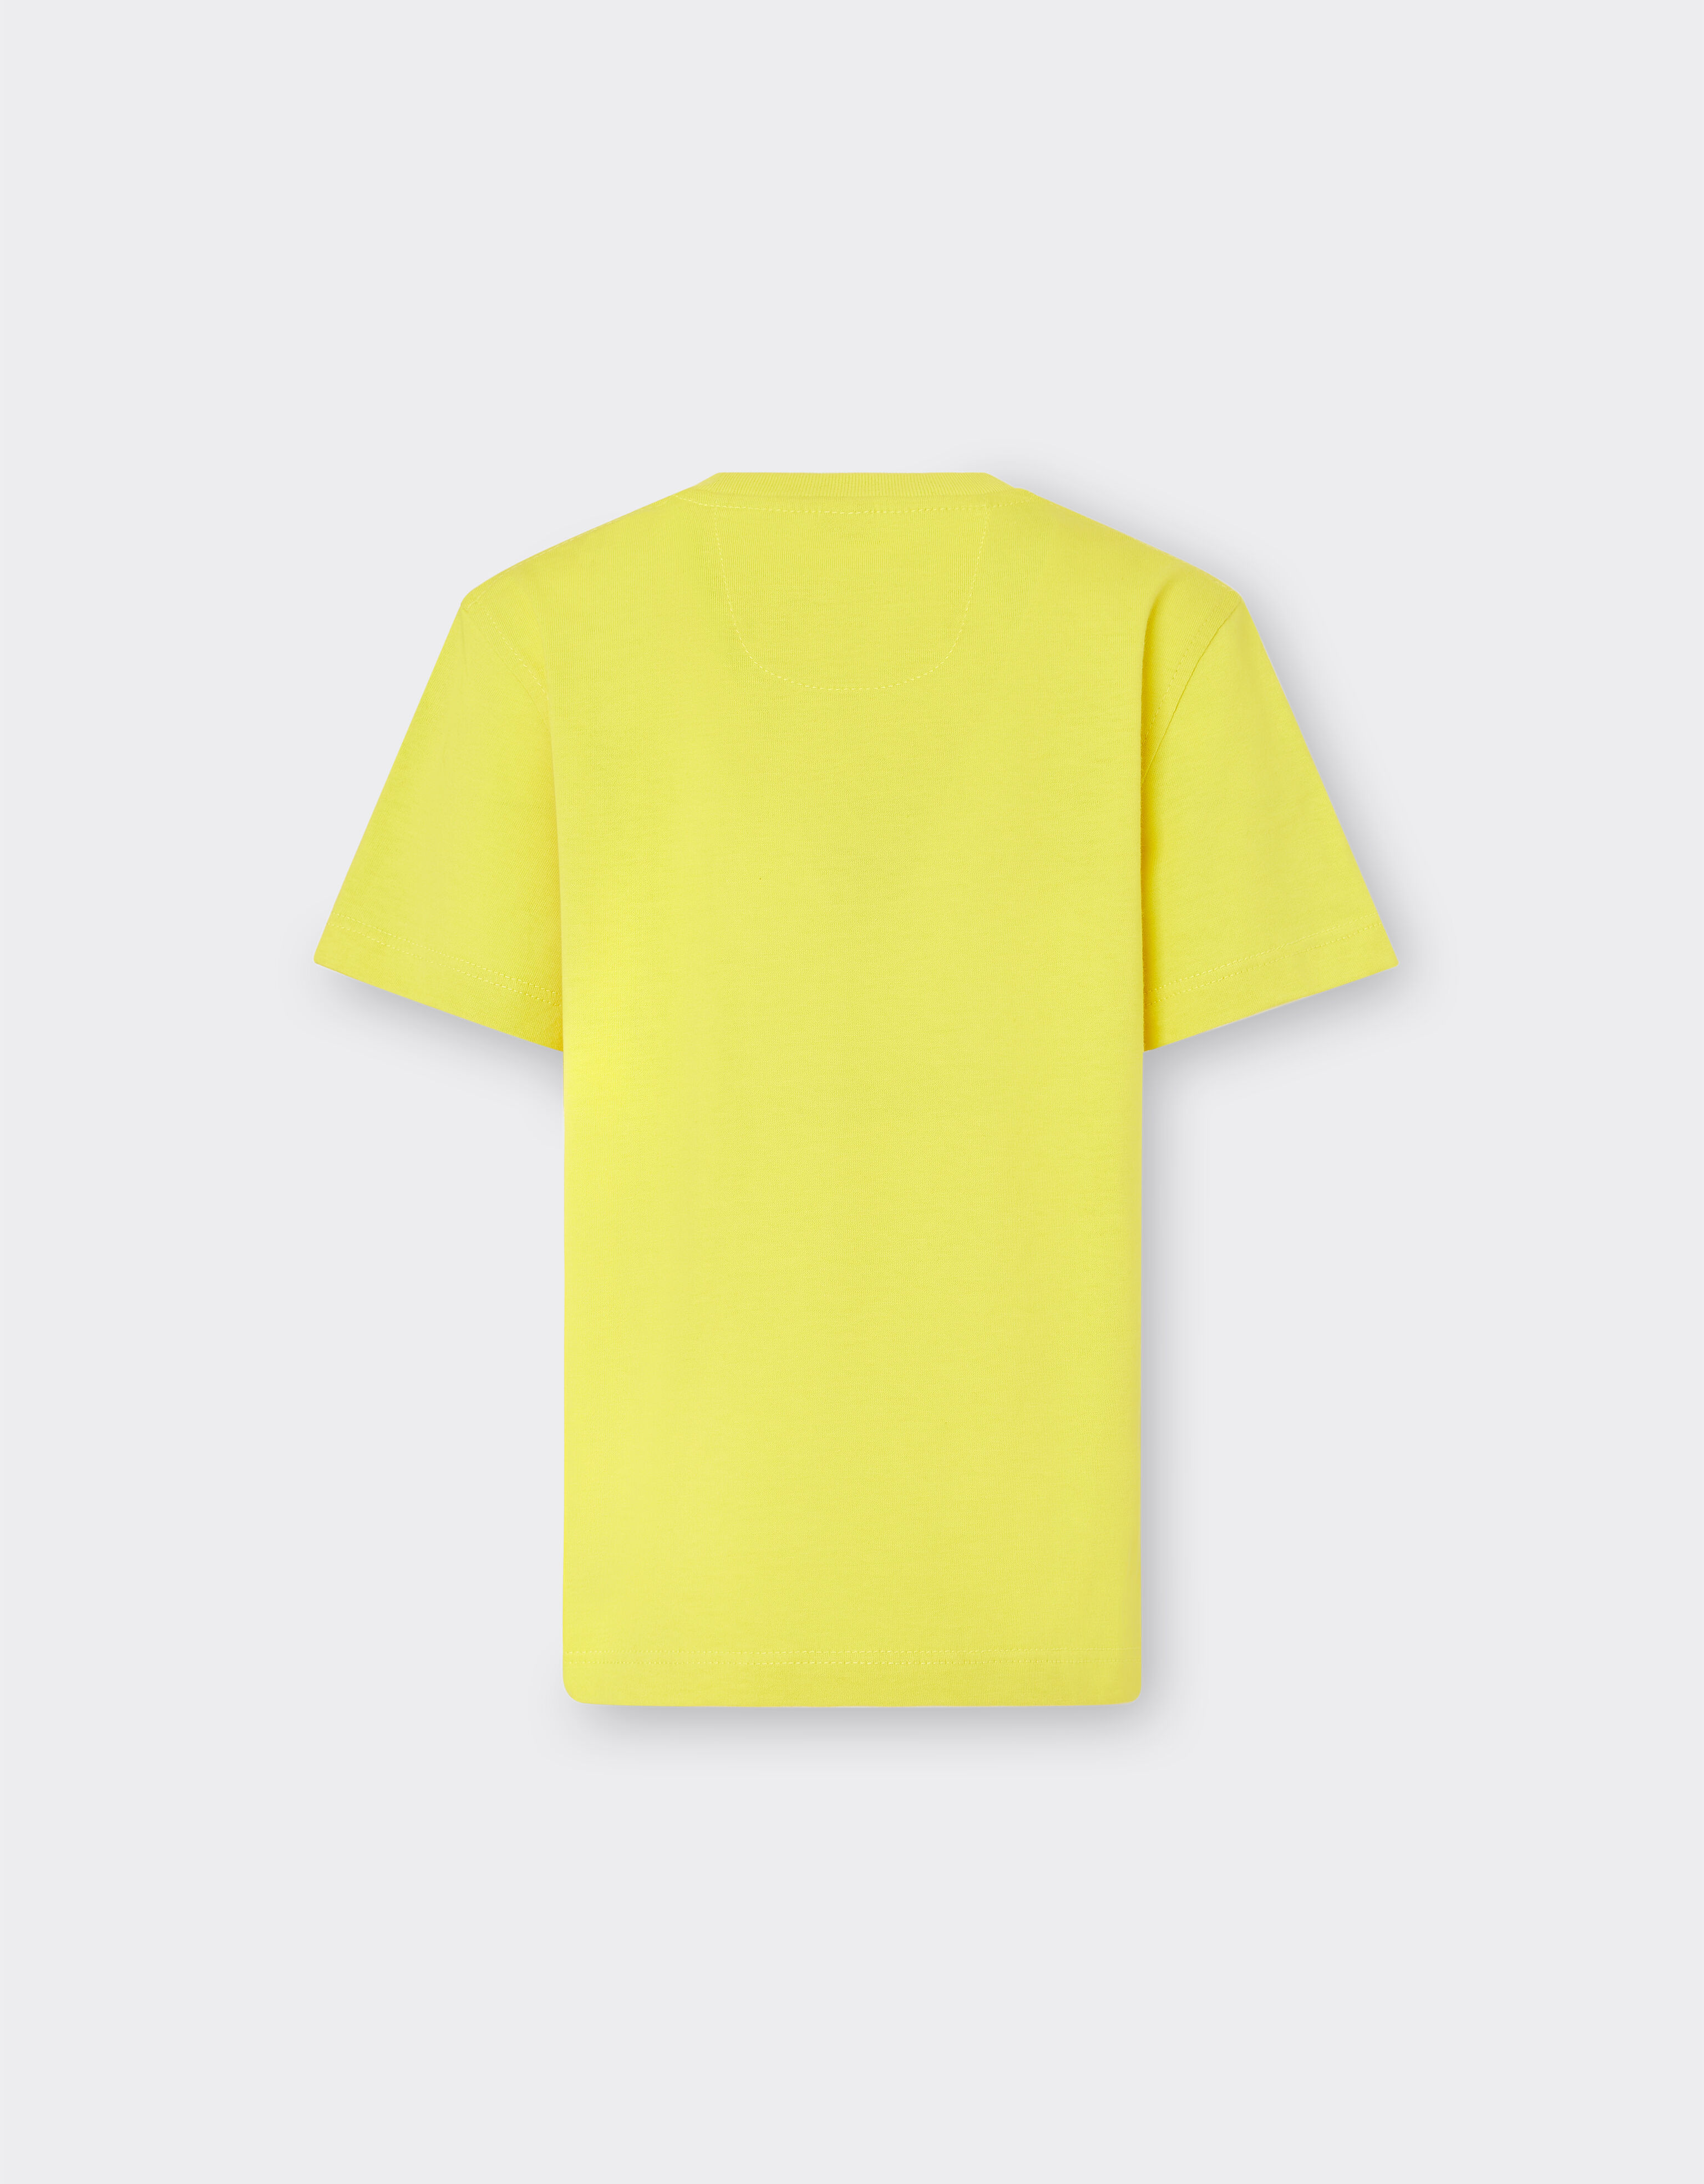 Ferrari Cotton T-shirt with Ferrari logo Giallo Modena 20162fK